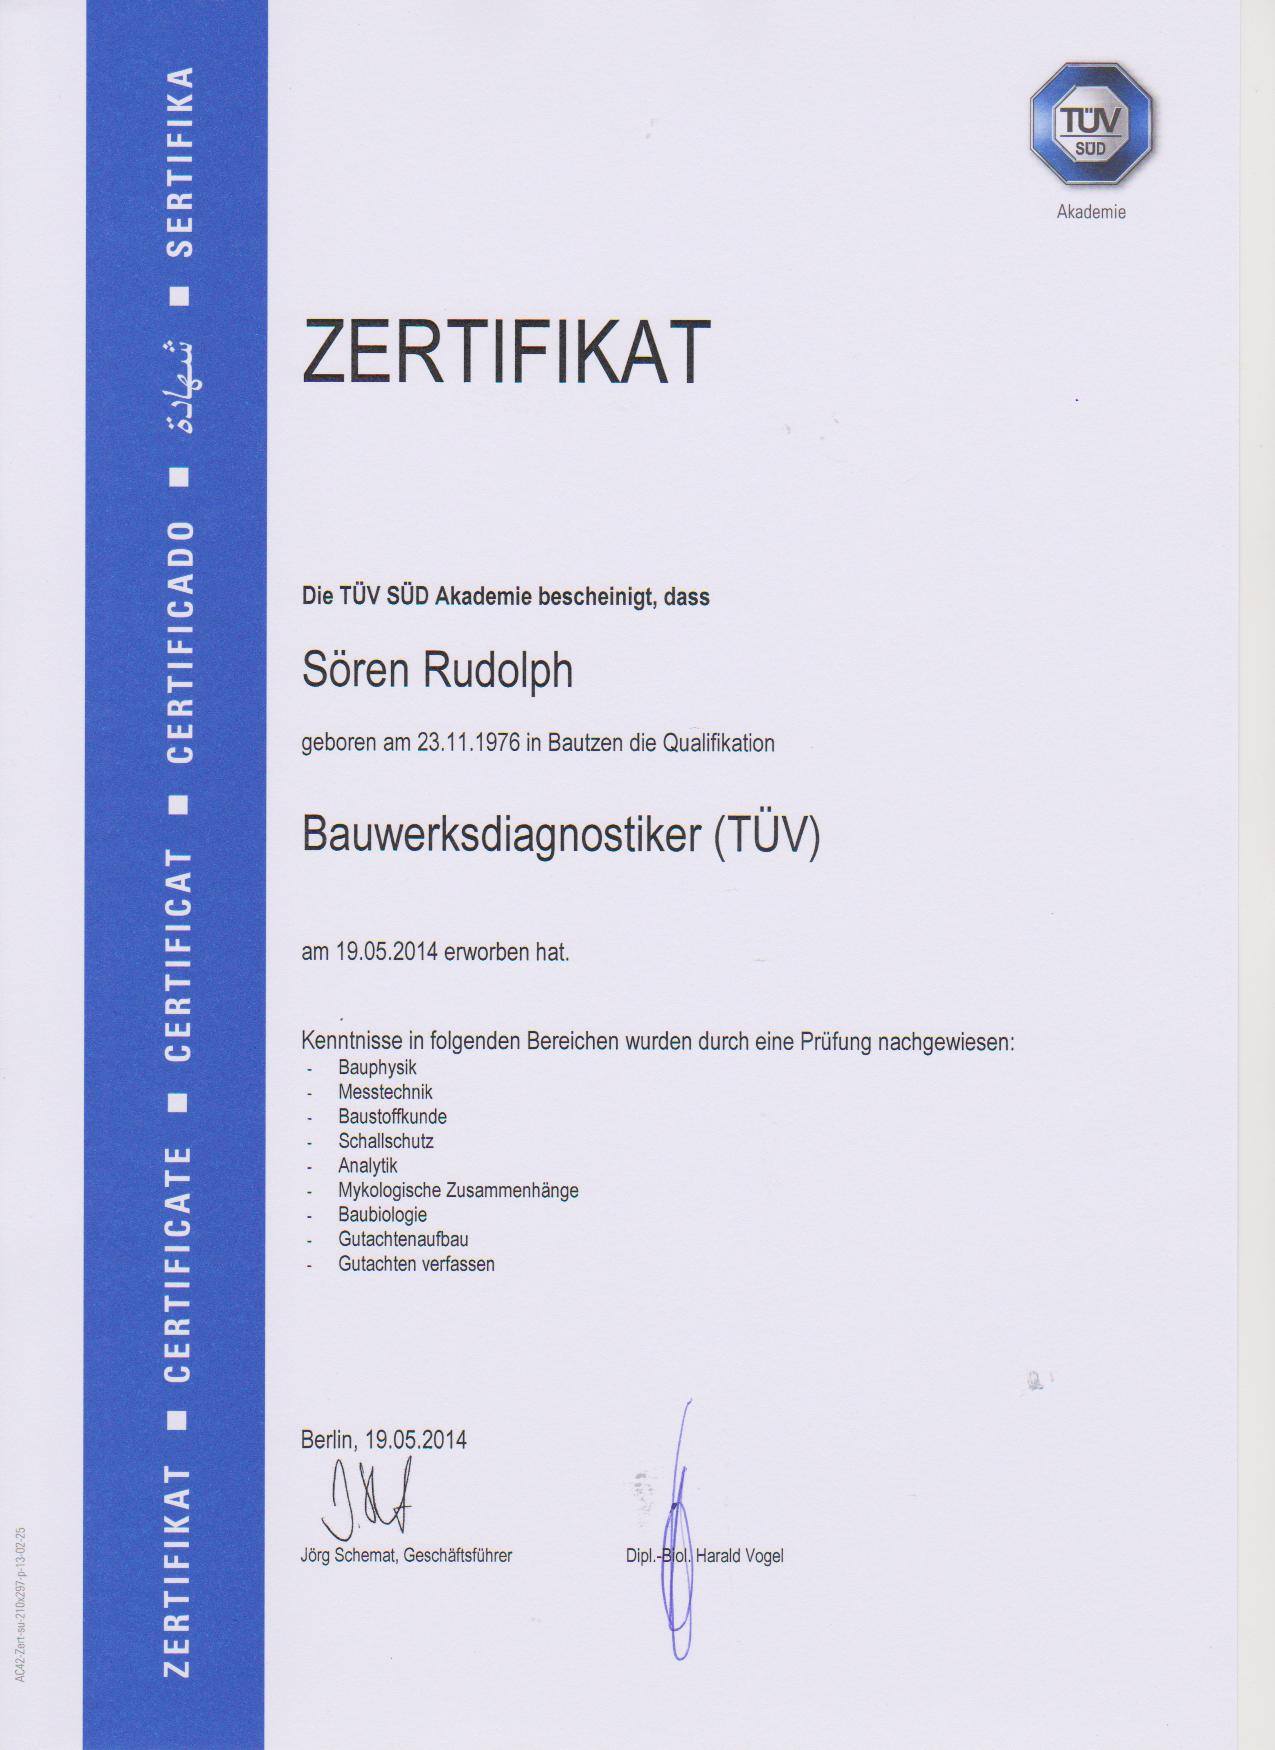 Zertifikat Bauwerksdiagnostiker Baurestauration Rudolph Bautzen